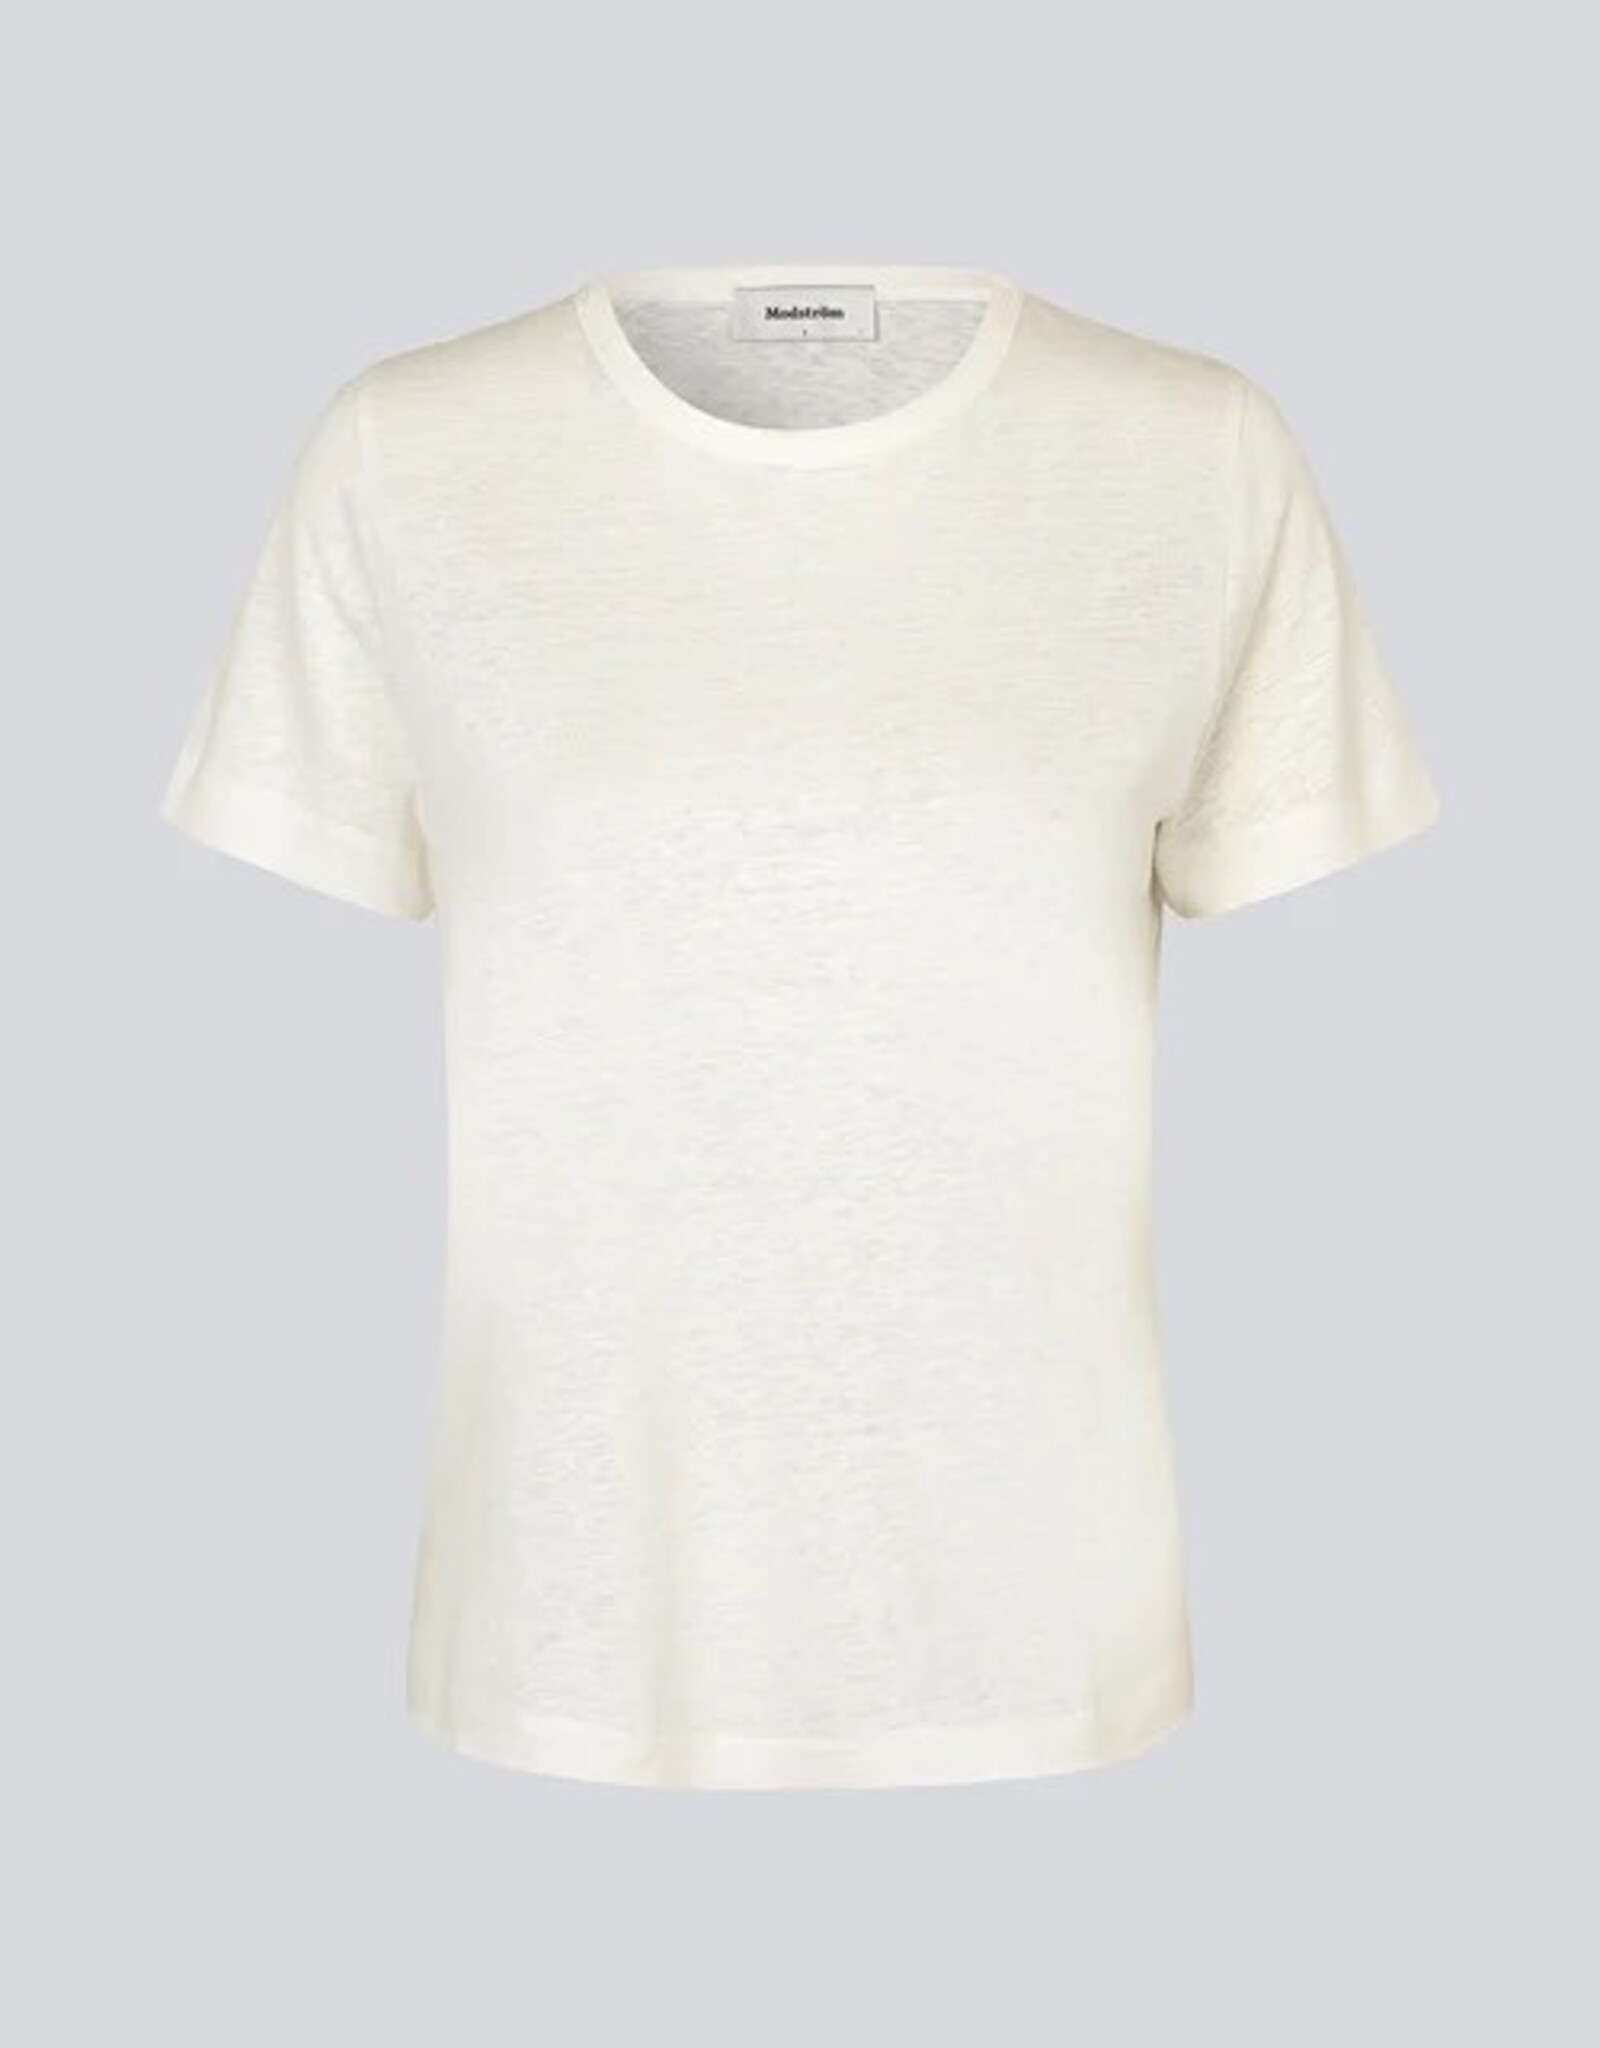 Modstrom Holt T-shirt Soft White